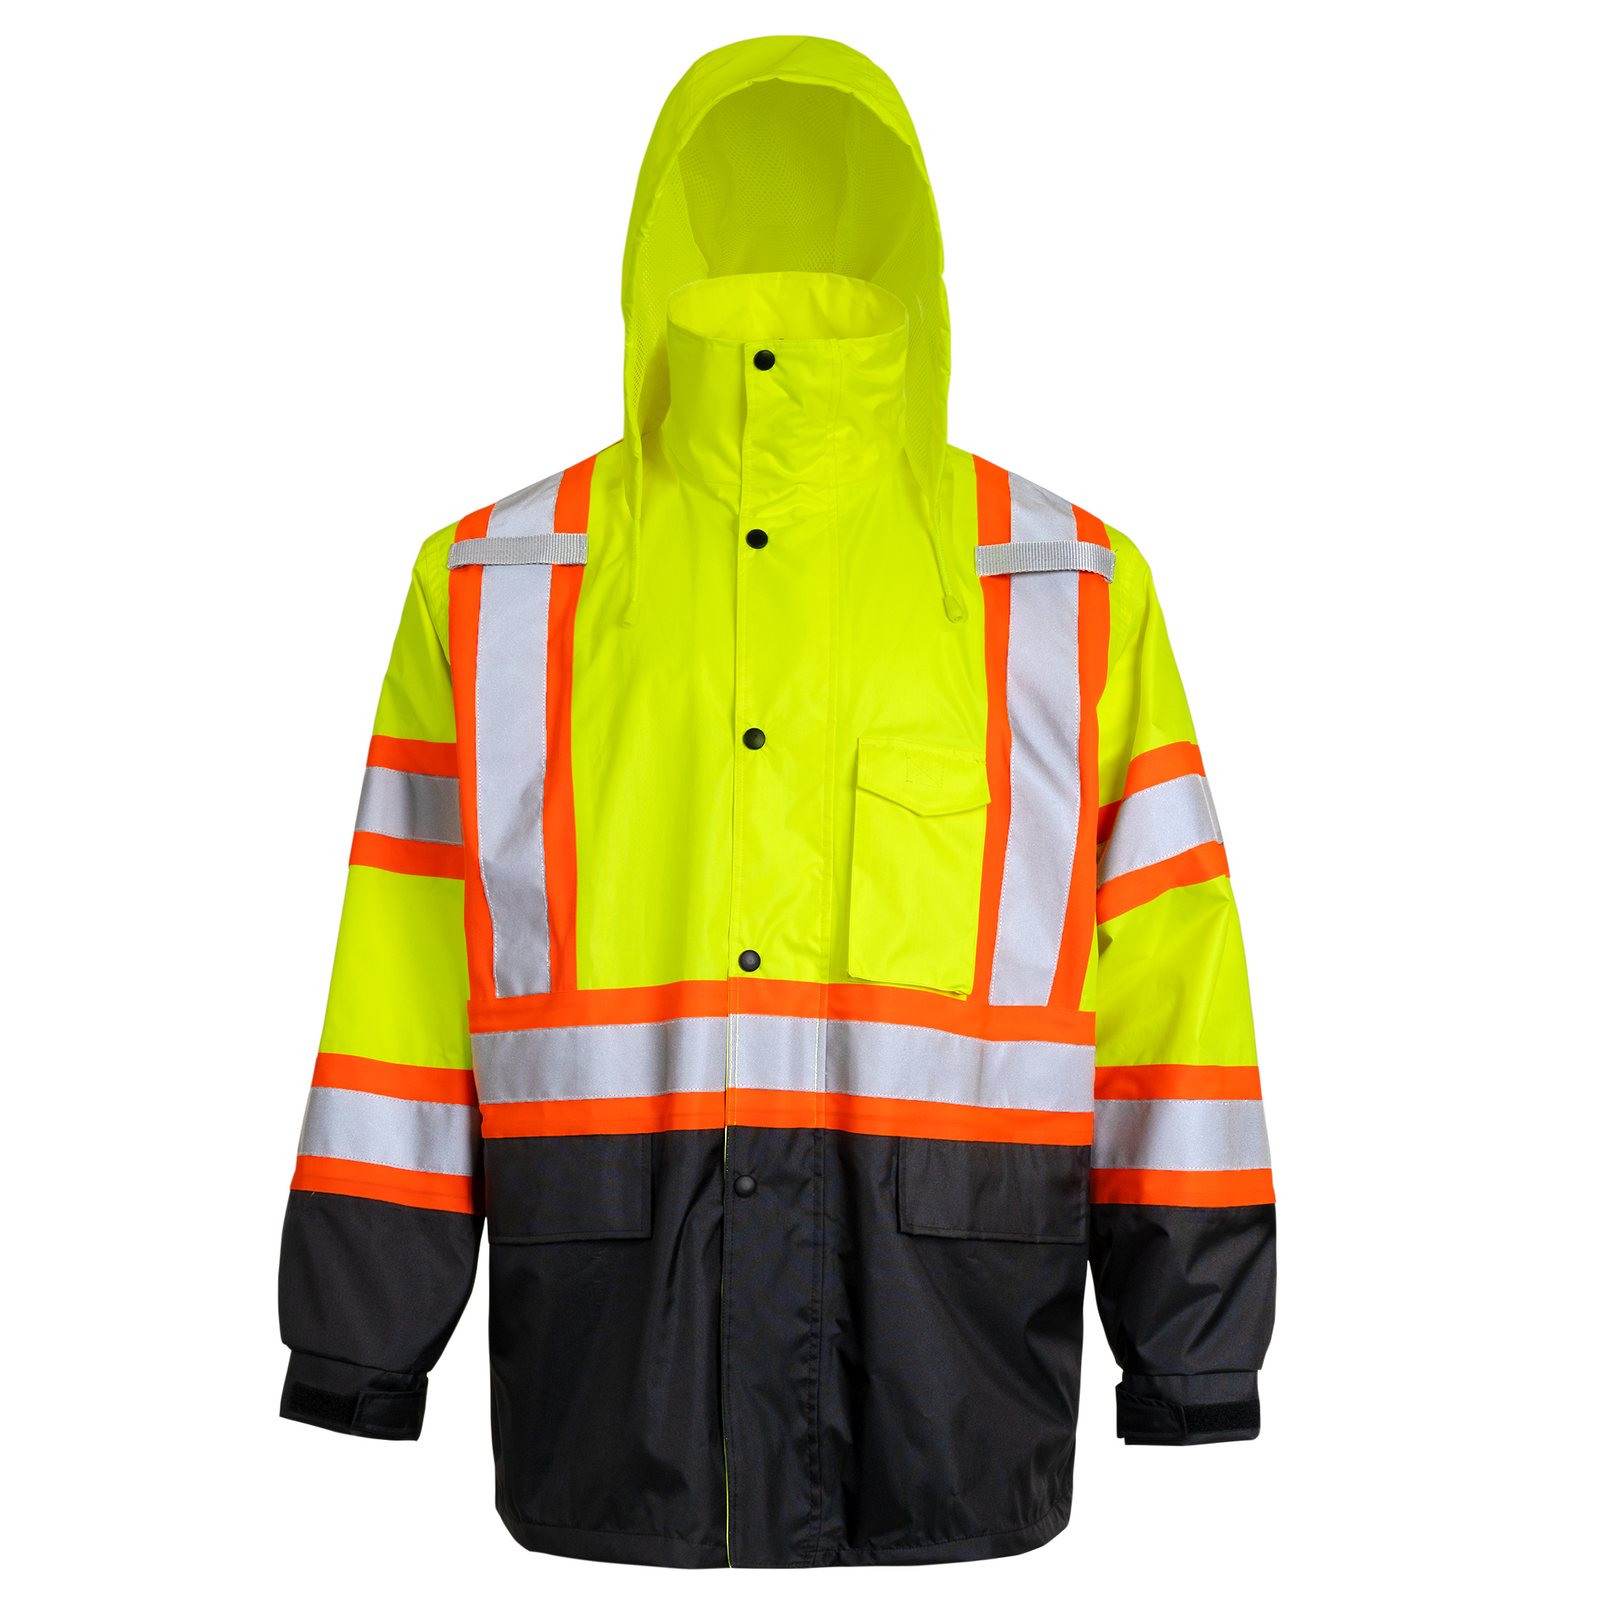 Yellow waterproof ANSI compliant safety jacket